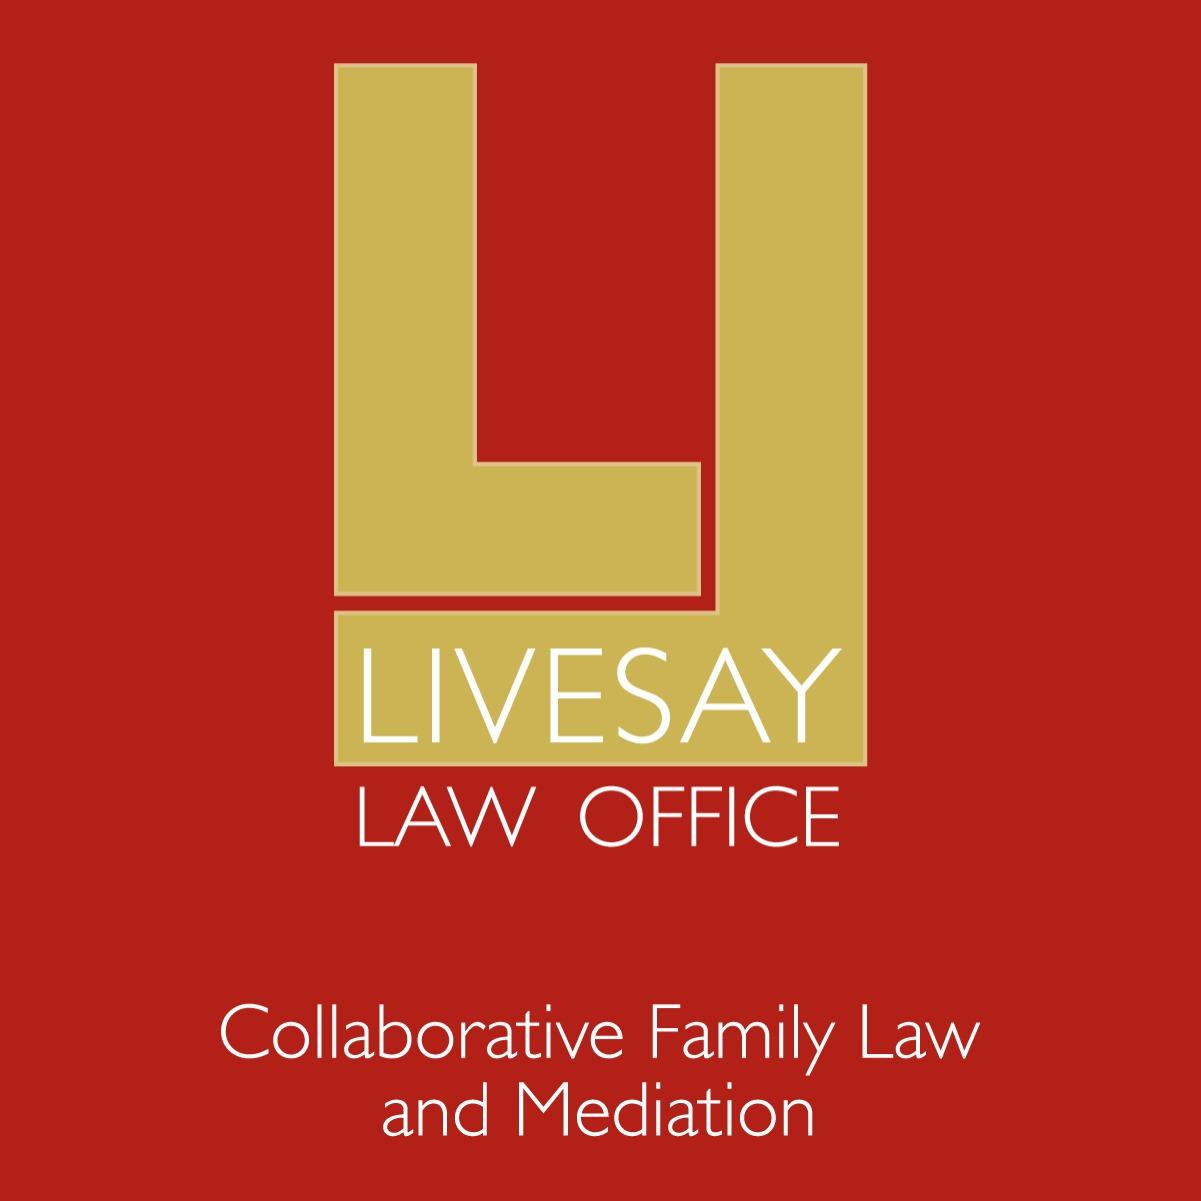 Livesay Law Office - Saint Paul, MN 55104 - (651)294-2338 | ShowMeLocal.com